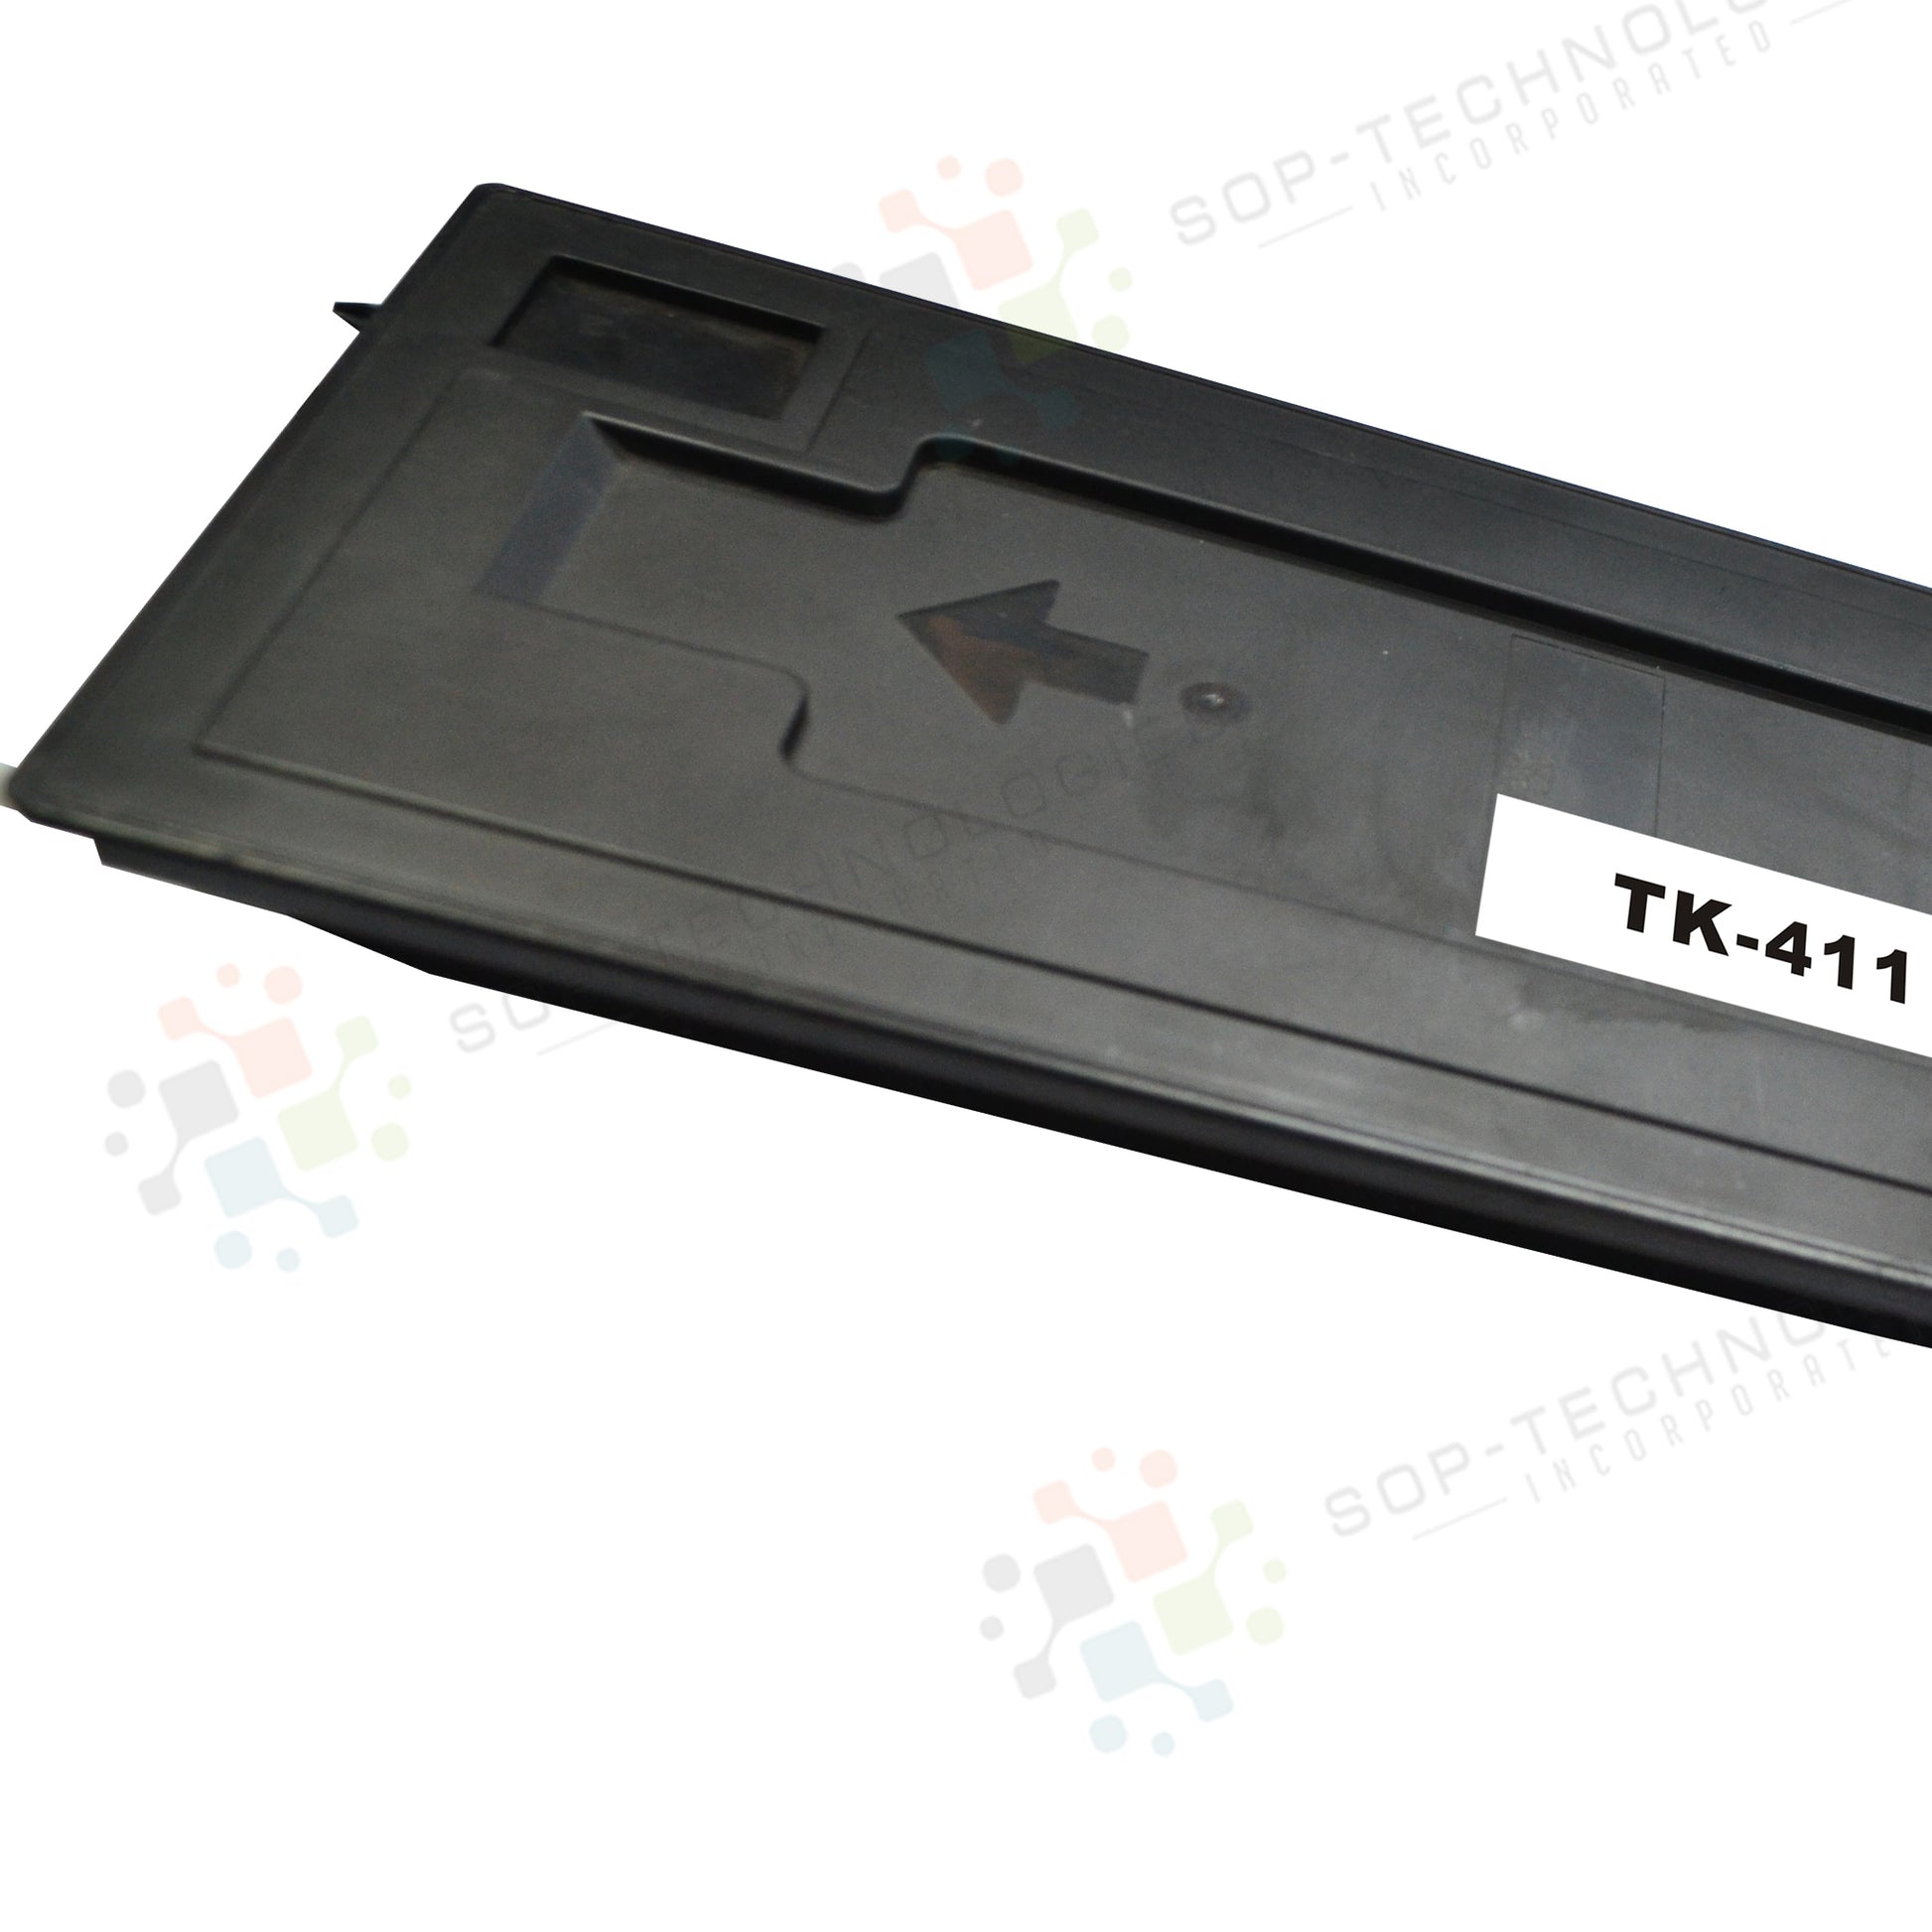 Pack Toner Cartridge for Kyocera KM-1620 - SOP-TECHNOLOGIES, INC.